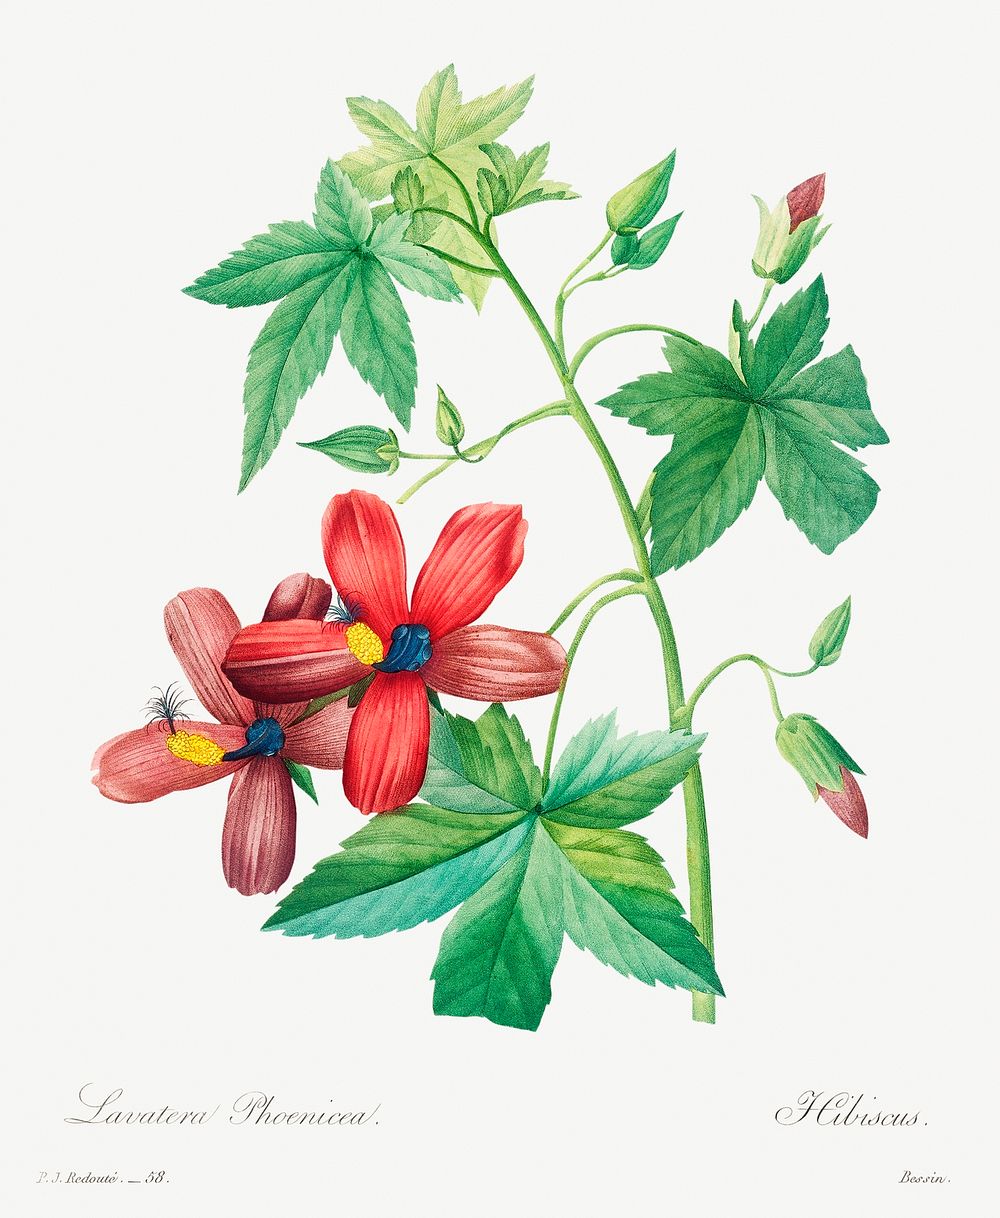 Lavatera phonica by Pierre-Joseph Redout&eacute; (1759&ndash;1840). Original from Biodiversity Heritage Library. Digitally…